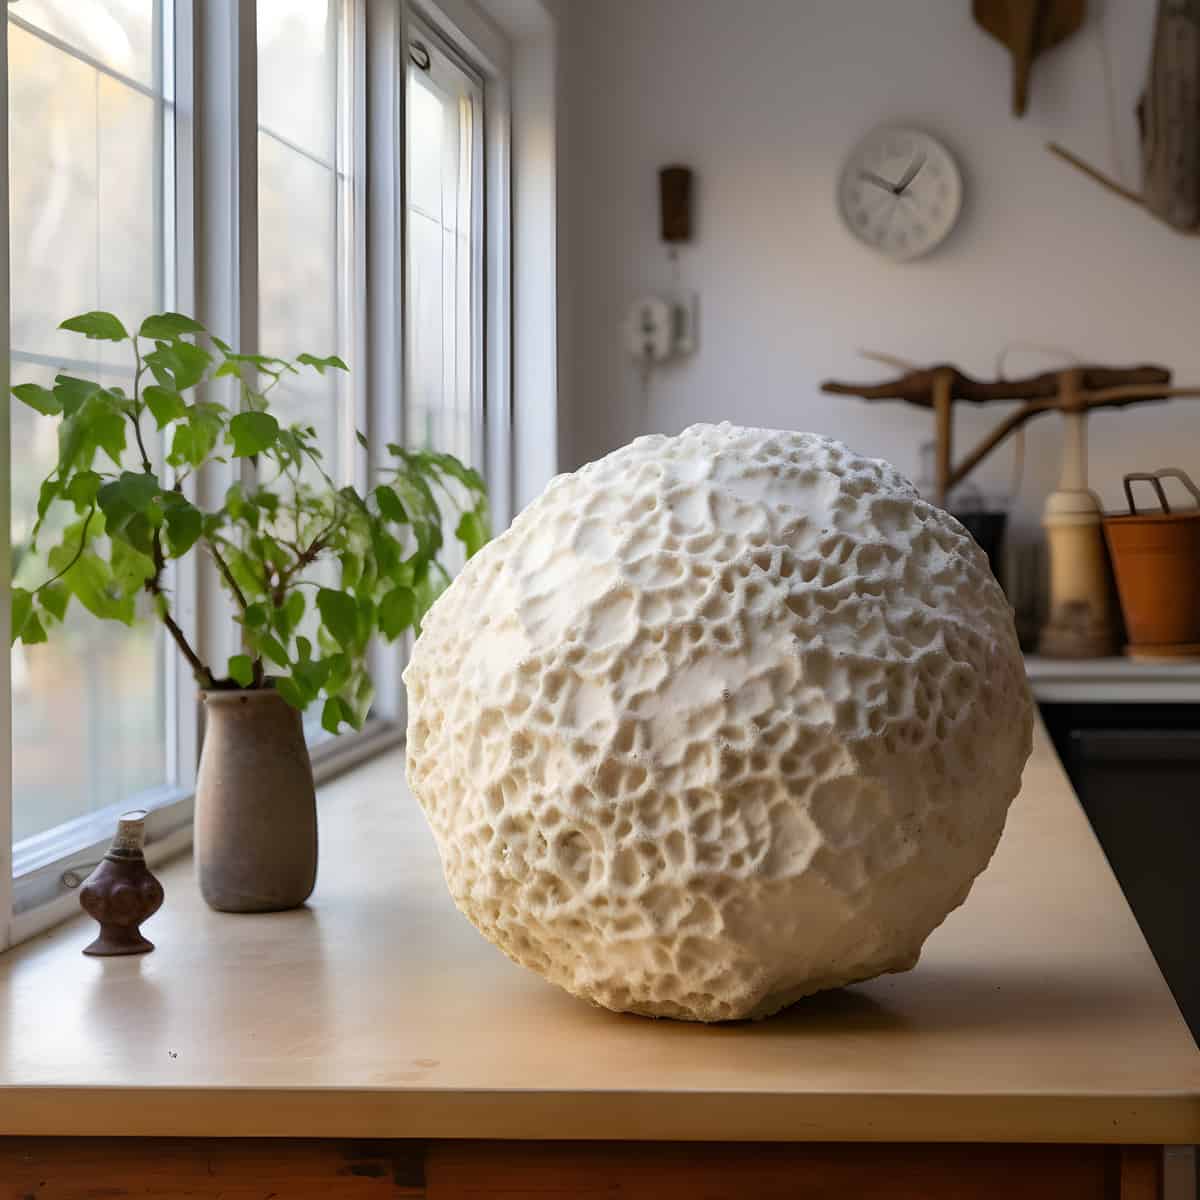 Sculptured Giant Puffballs on a kitchen counter